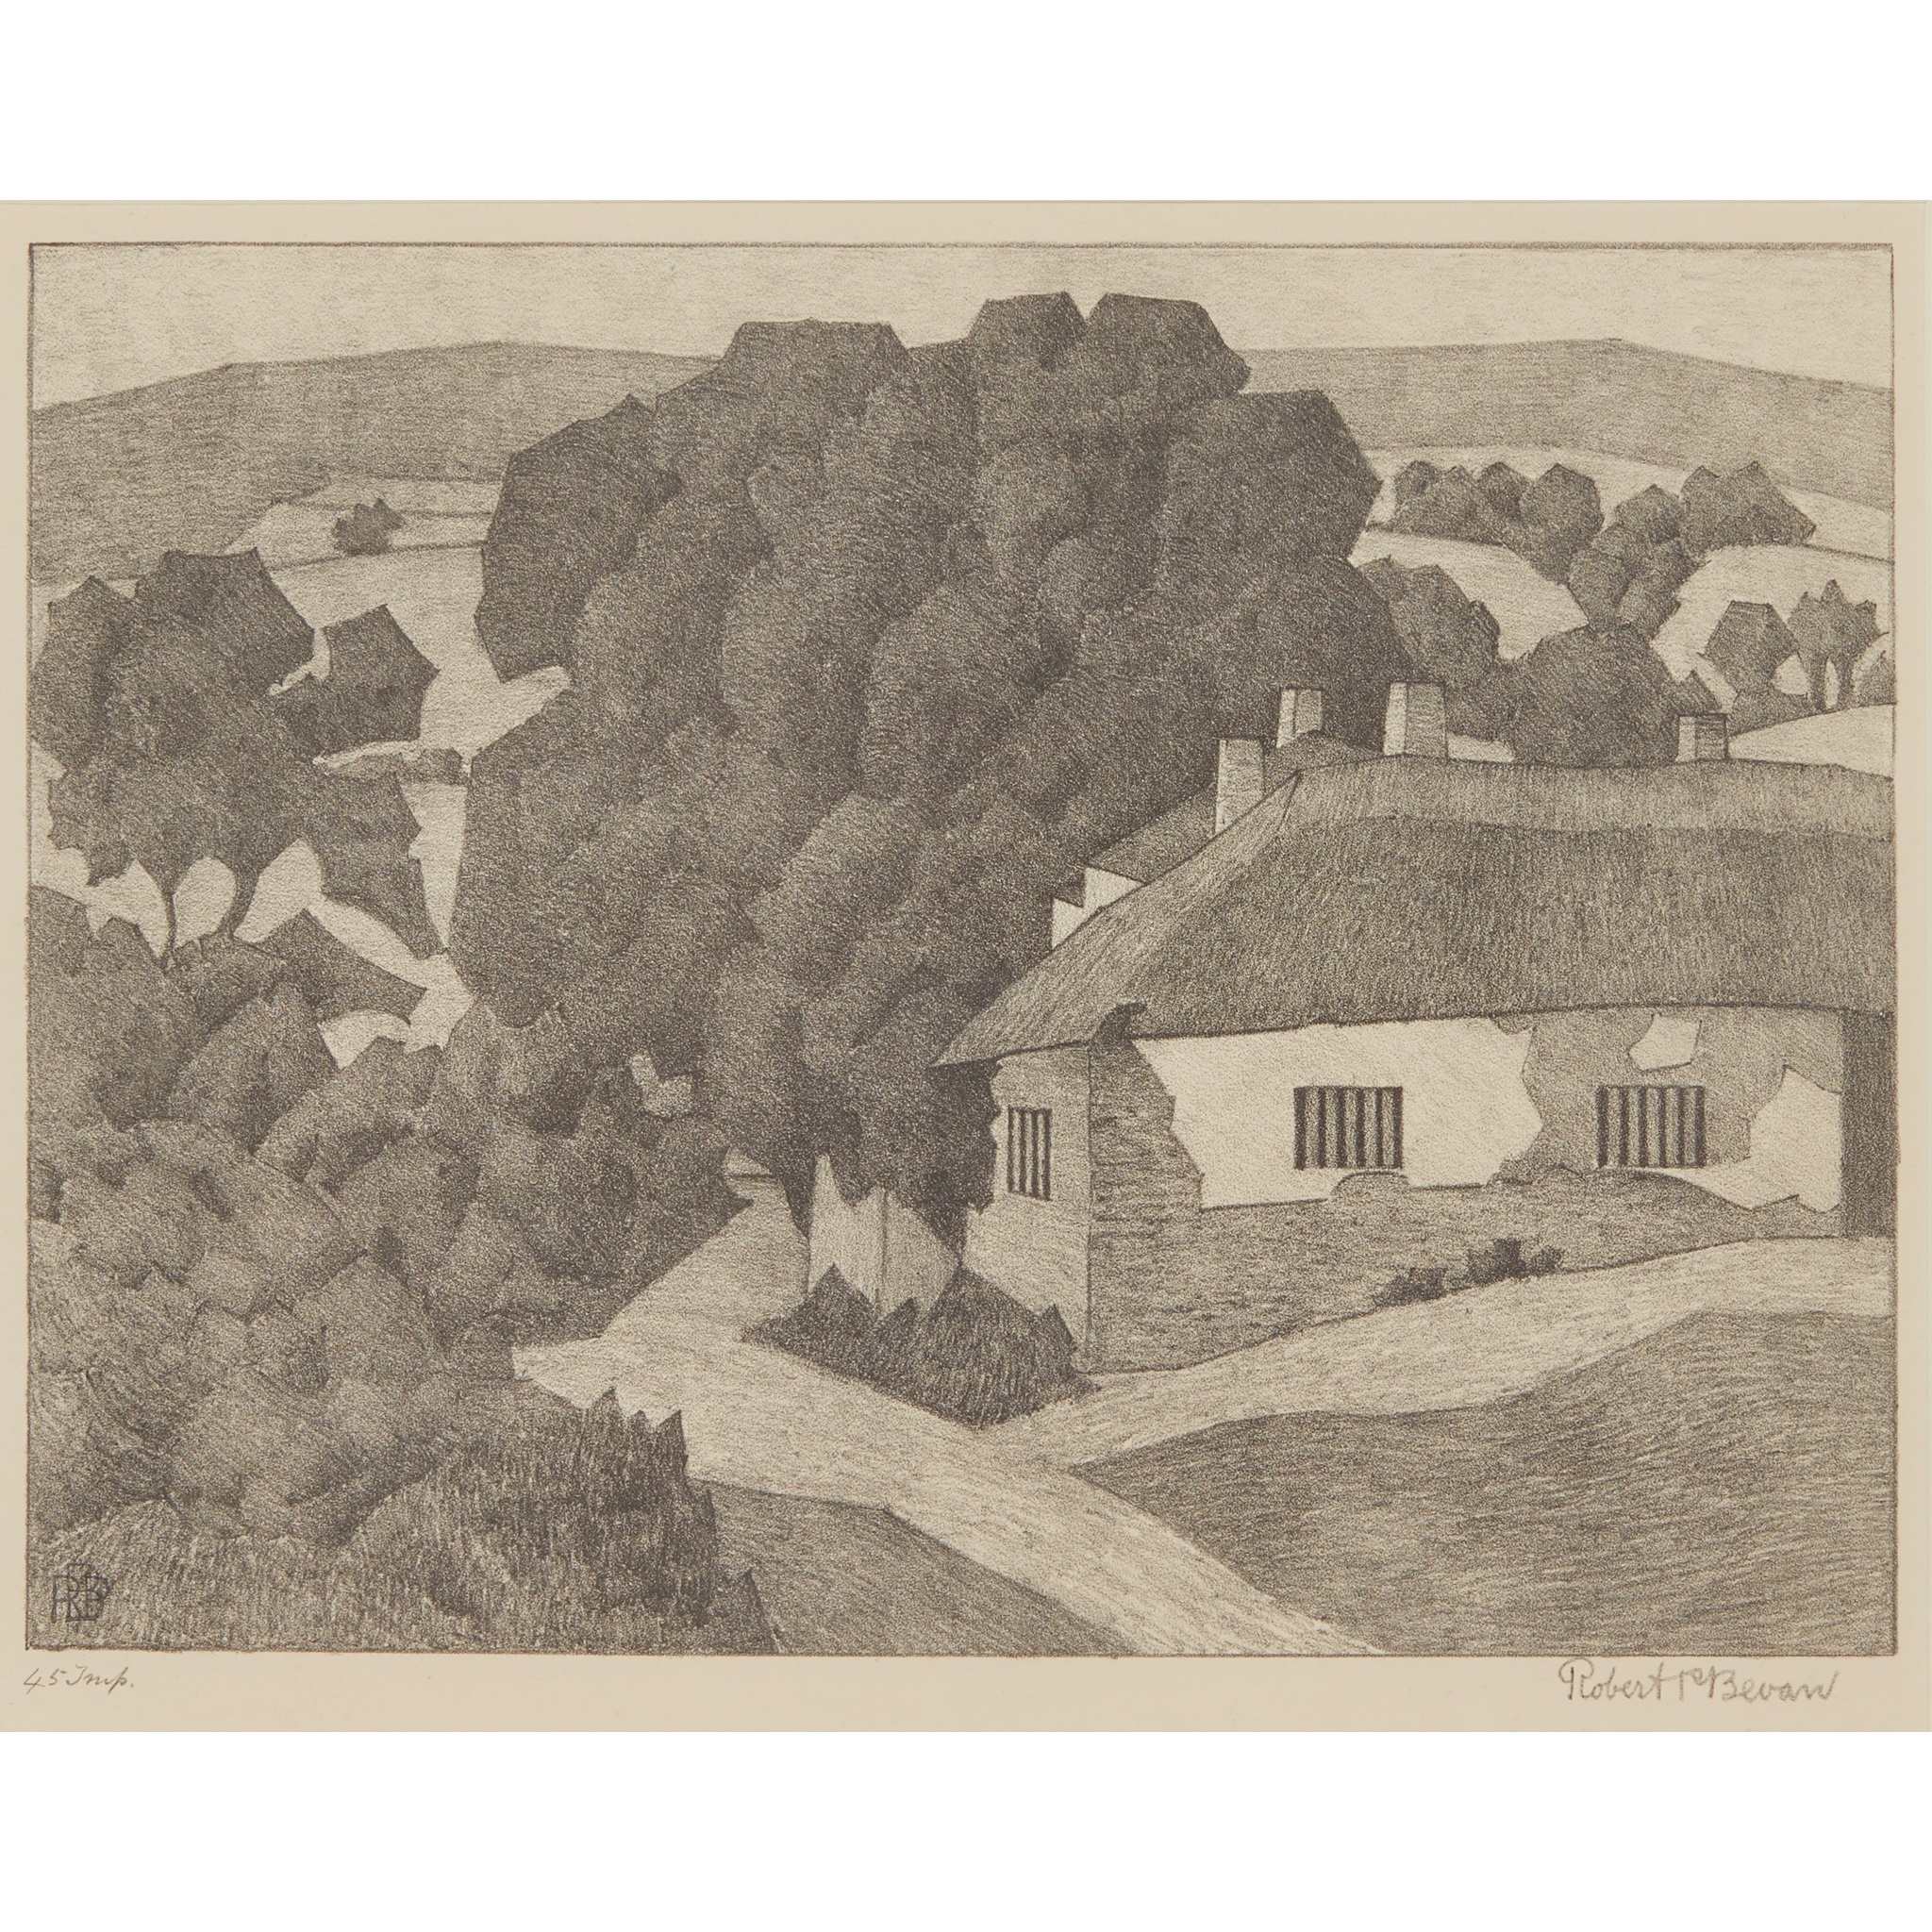 The Smithy, Luppitt, 1920, Robert Bevan